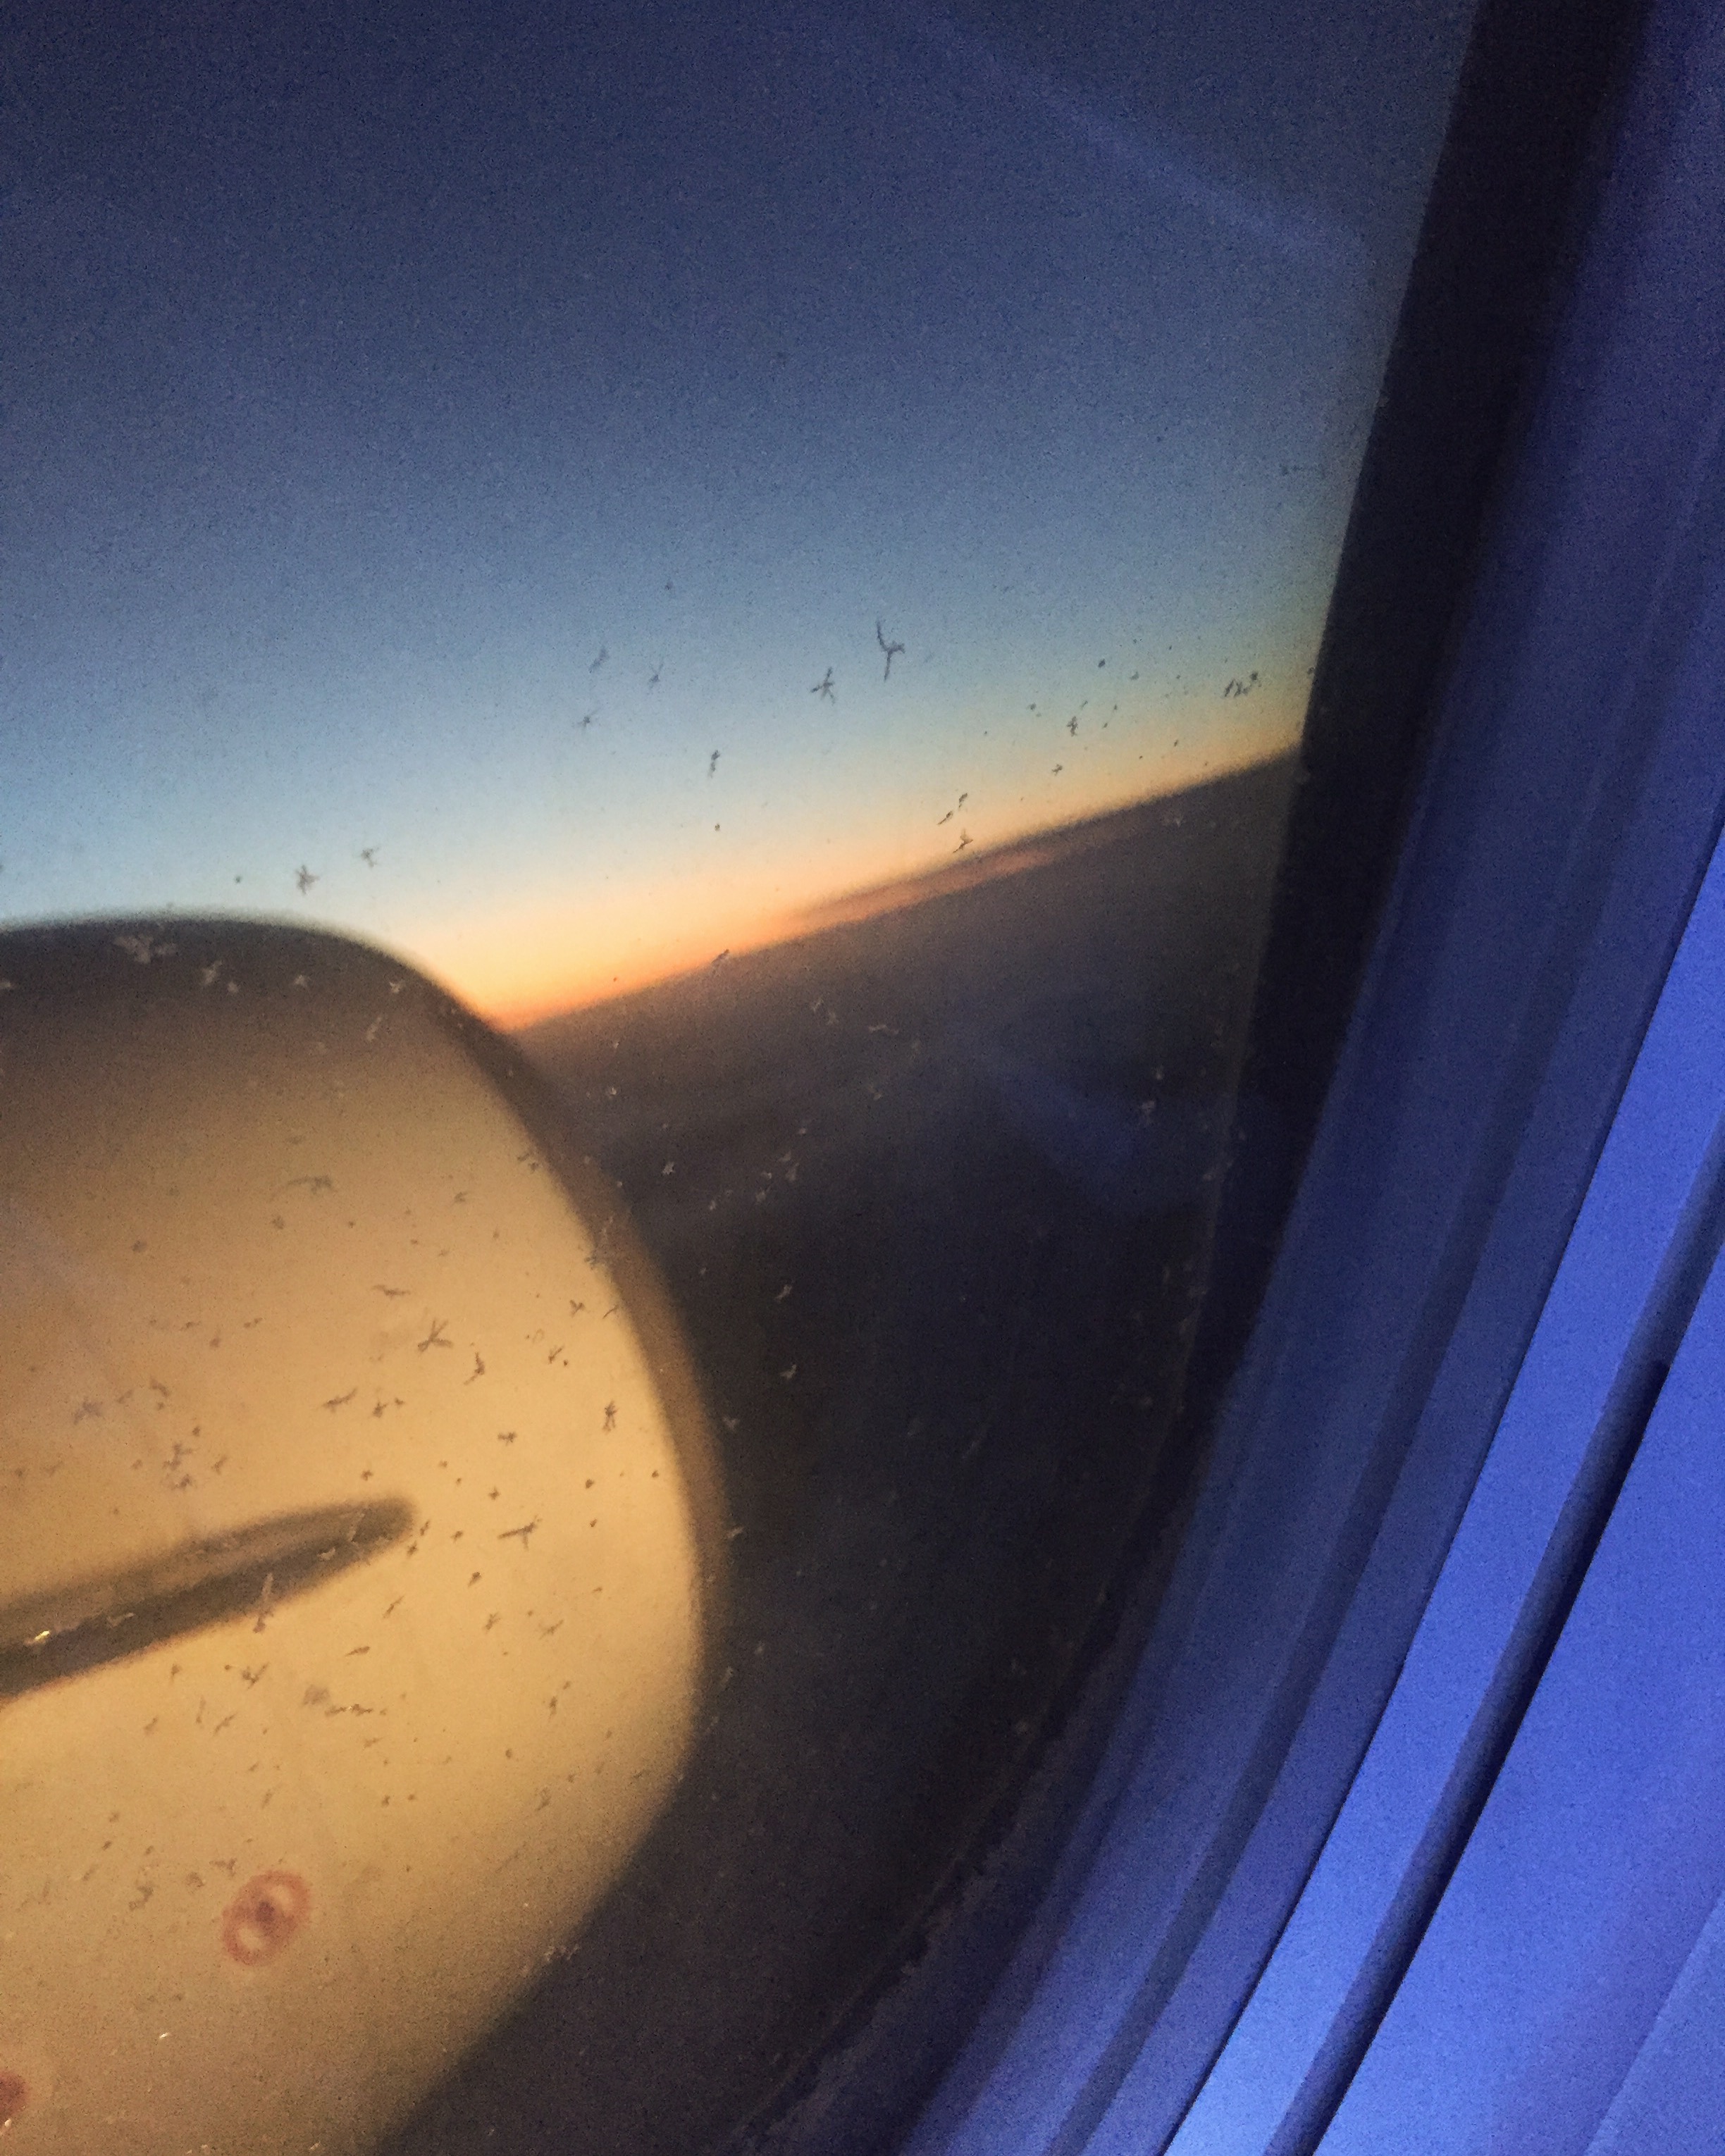 A photo taken through an aircraft window looking out across a sunset